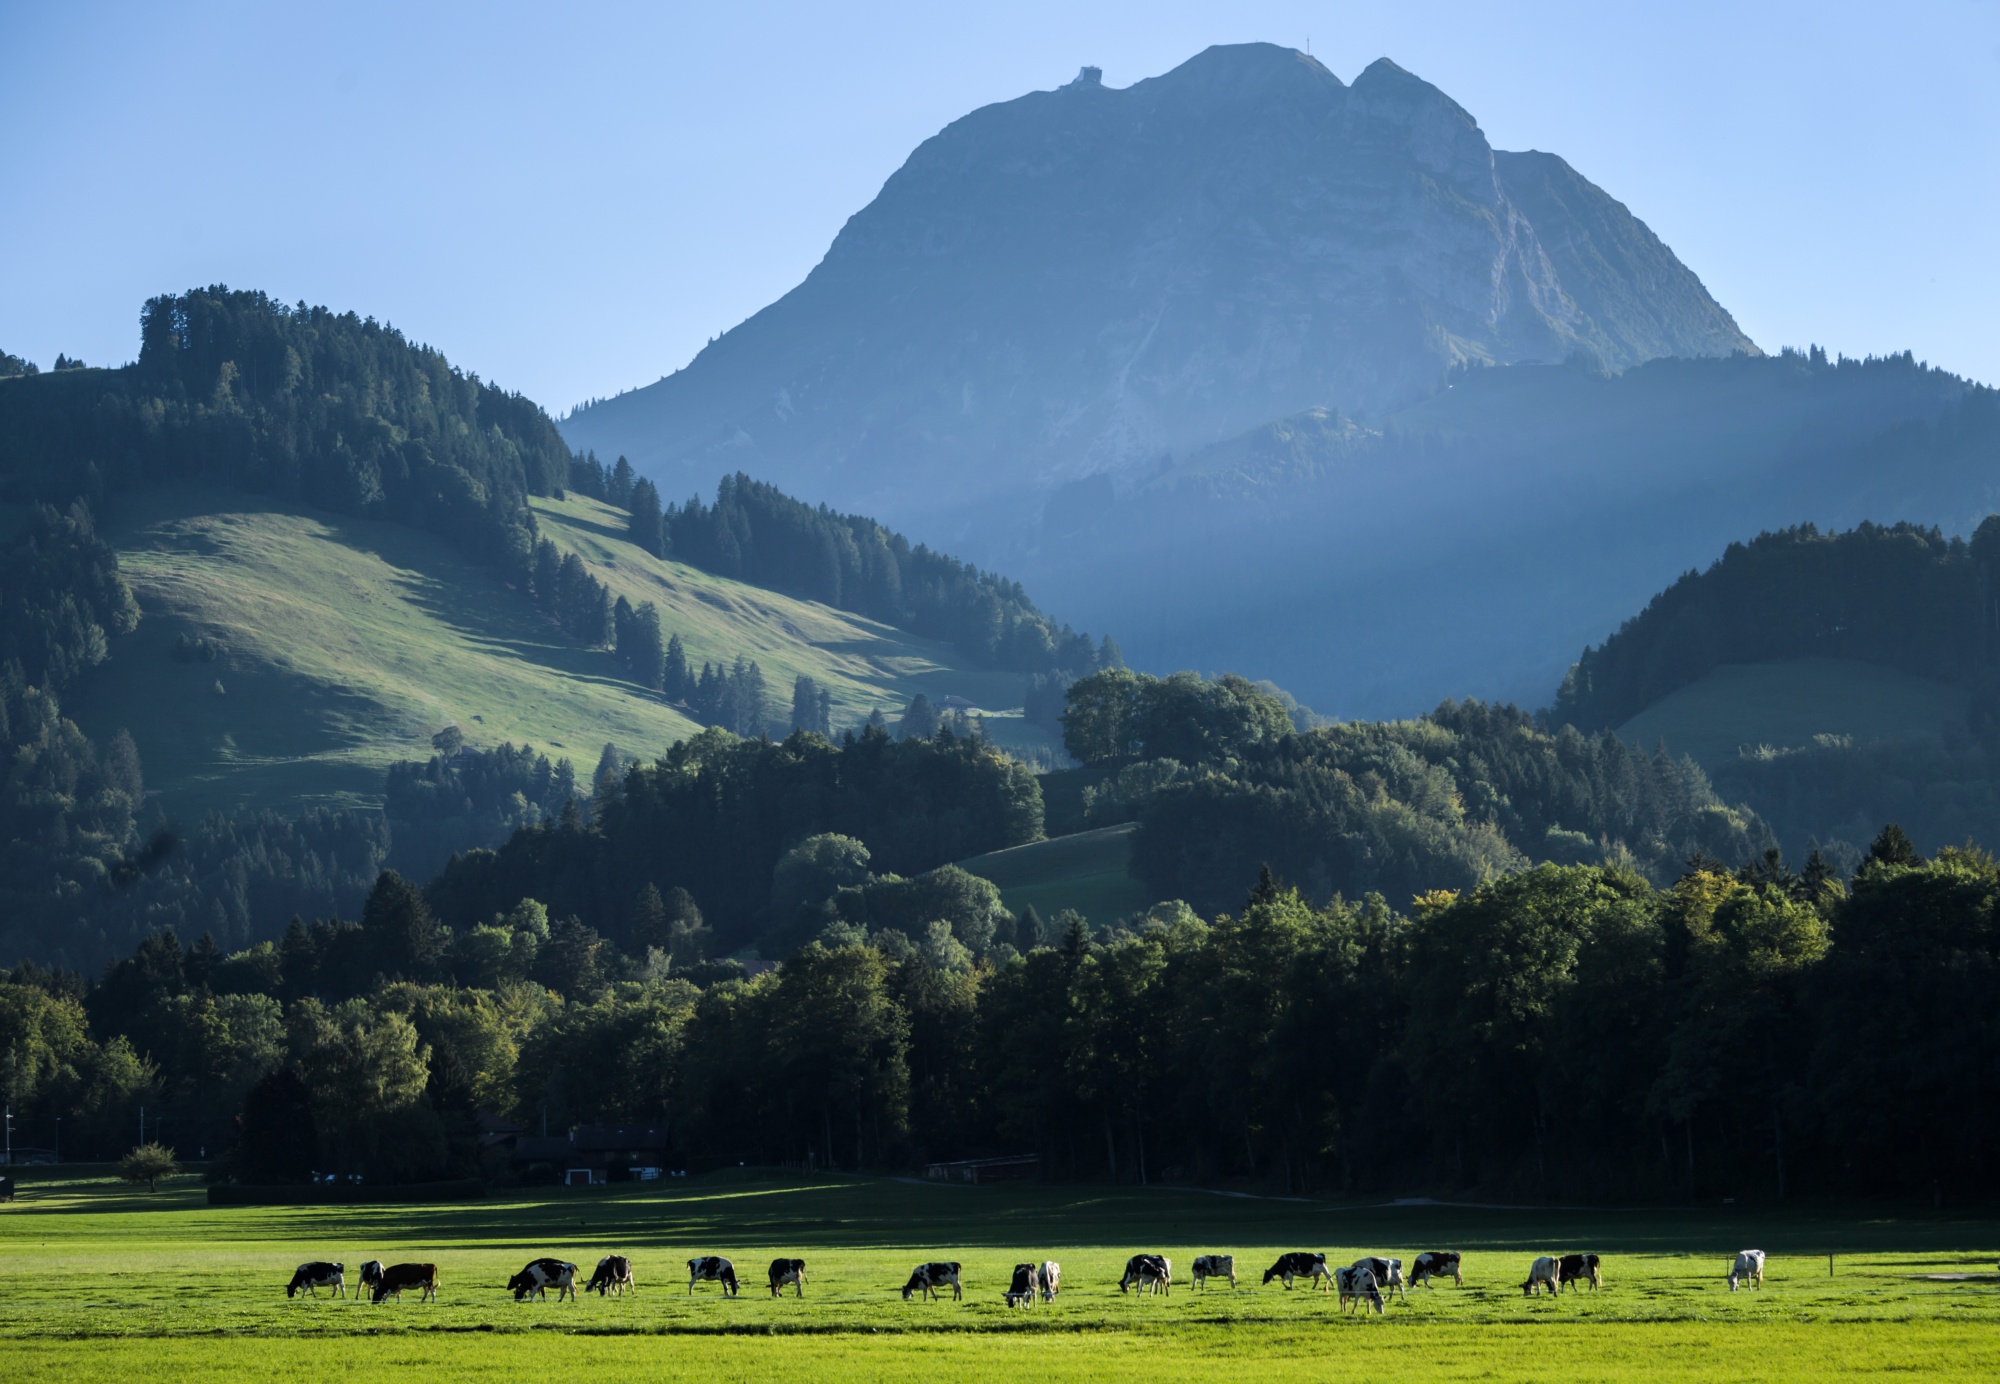 A retreat into Switzerland could make sense.